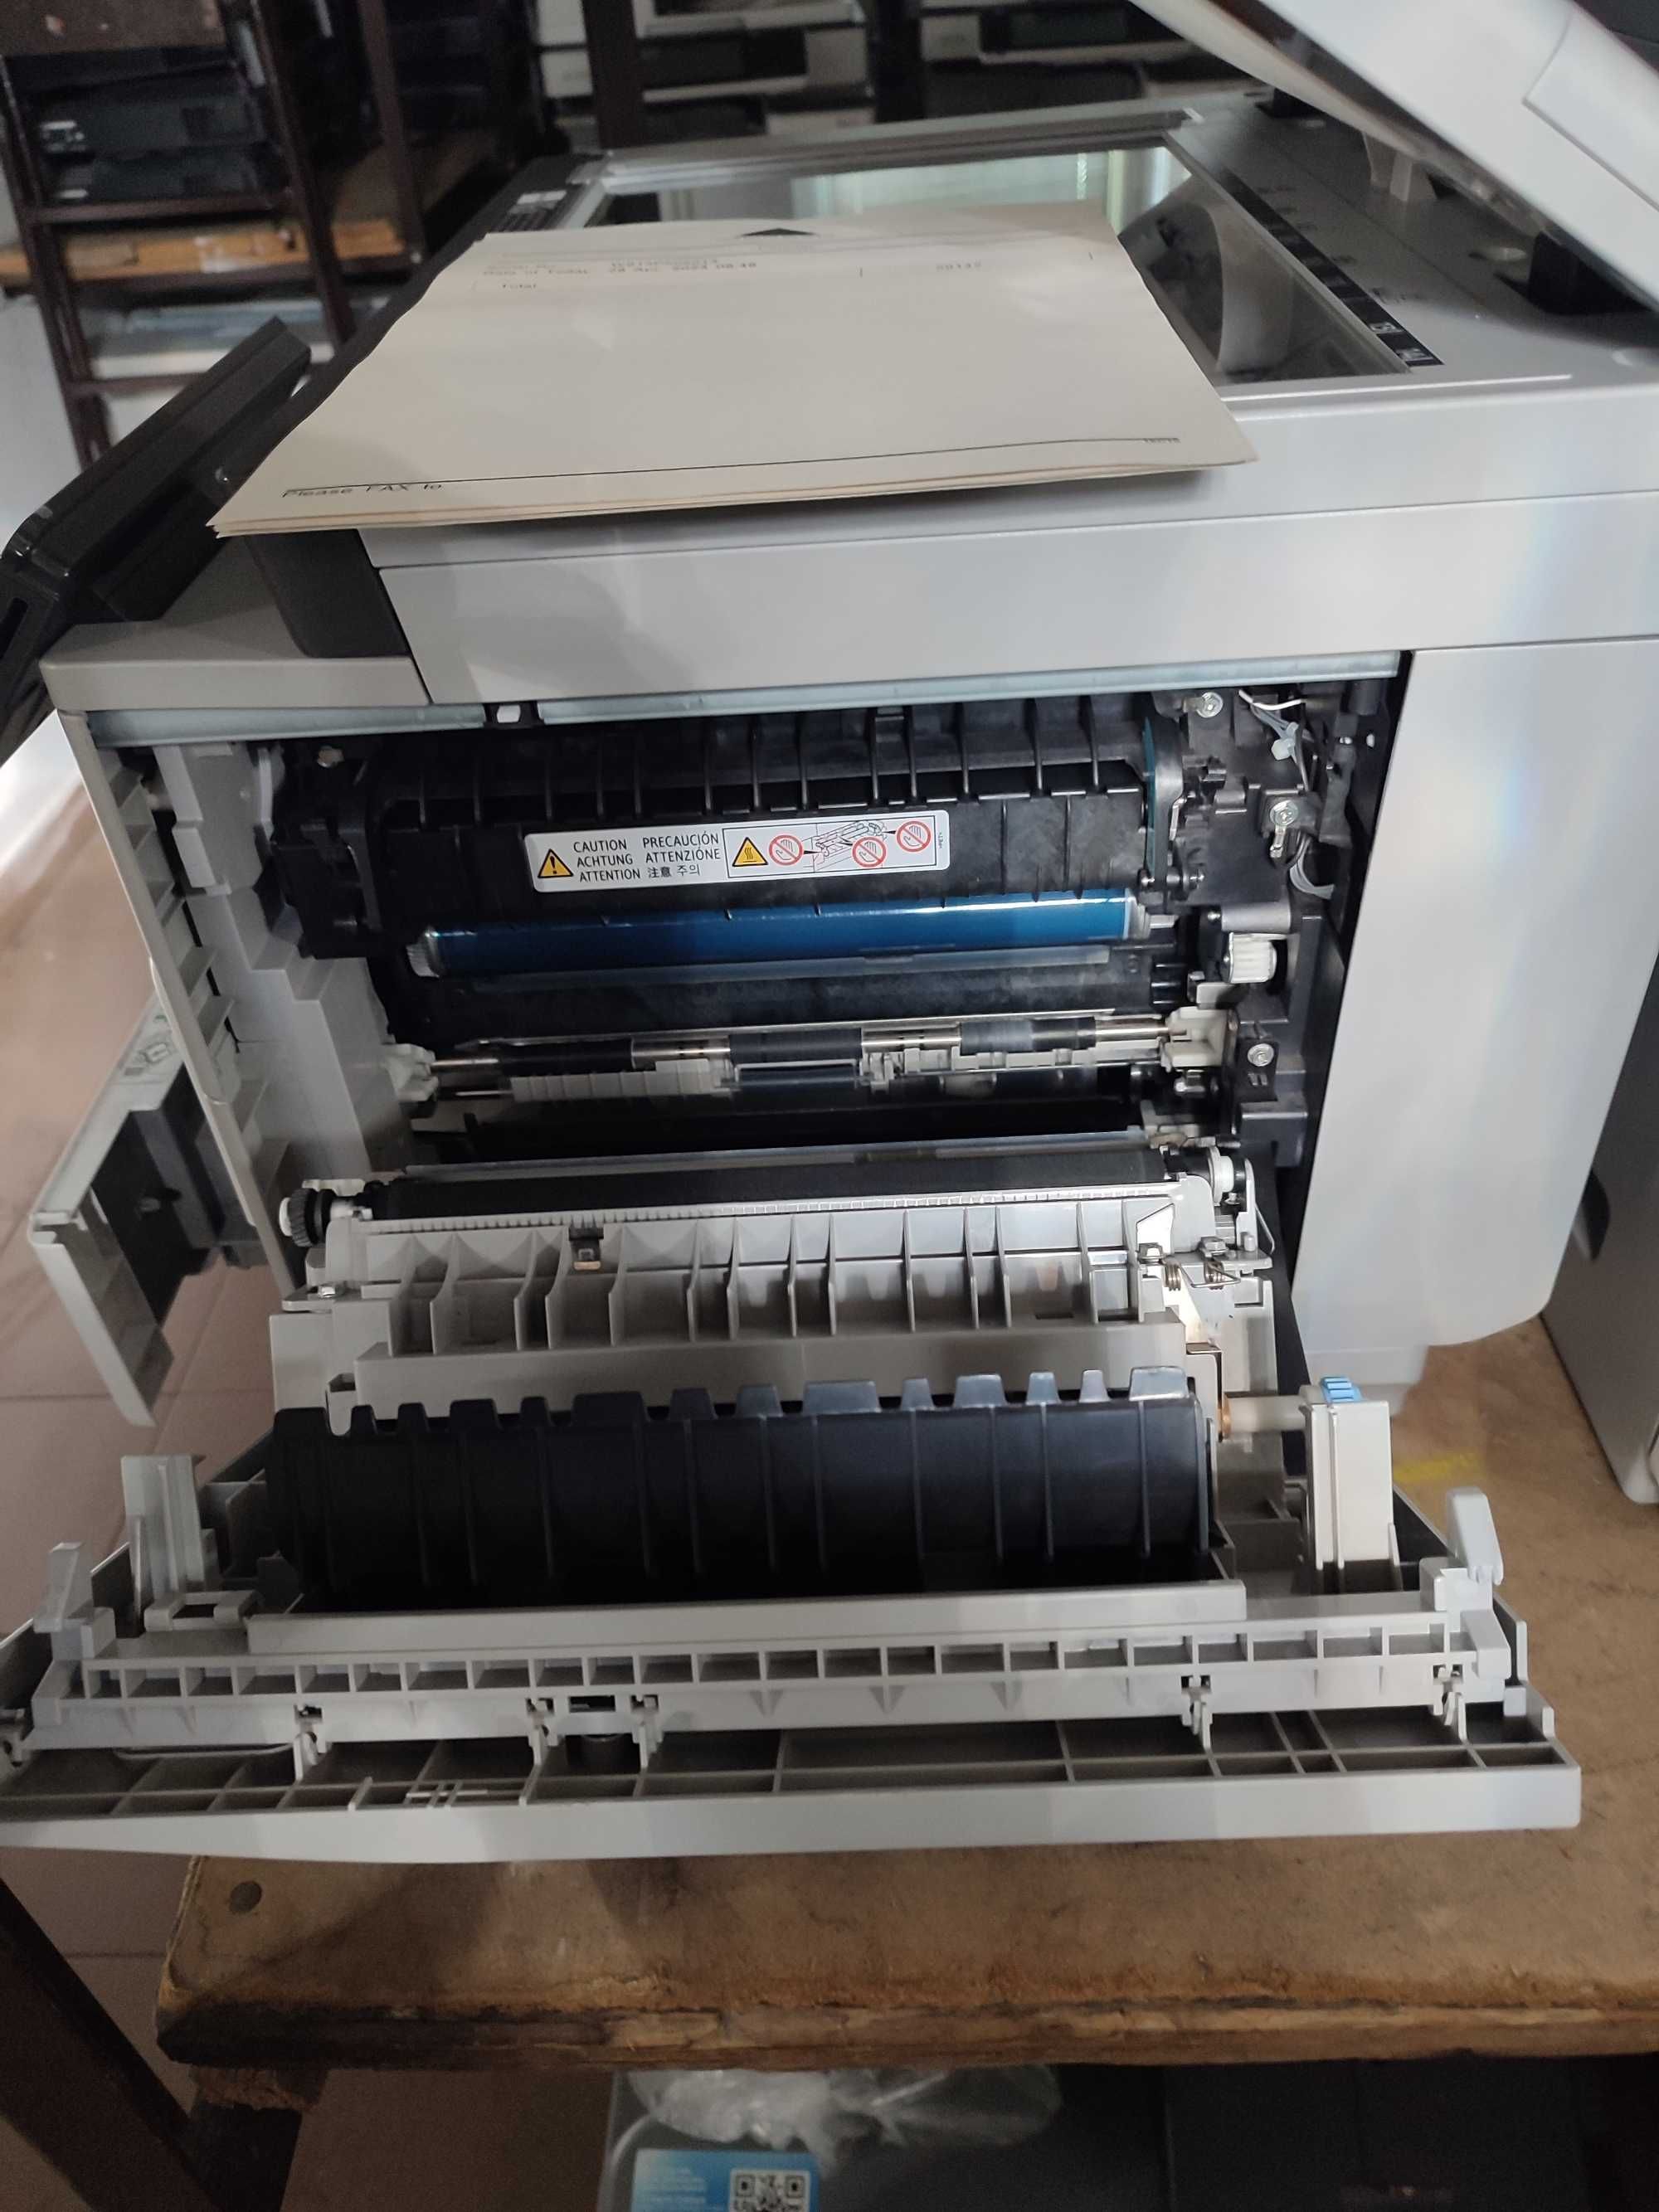 kserokopiarka drukarka a4 mono wielofunkcyjna Ricoh mp301spf okazja